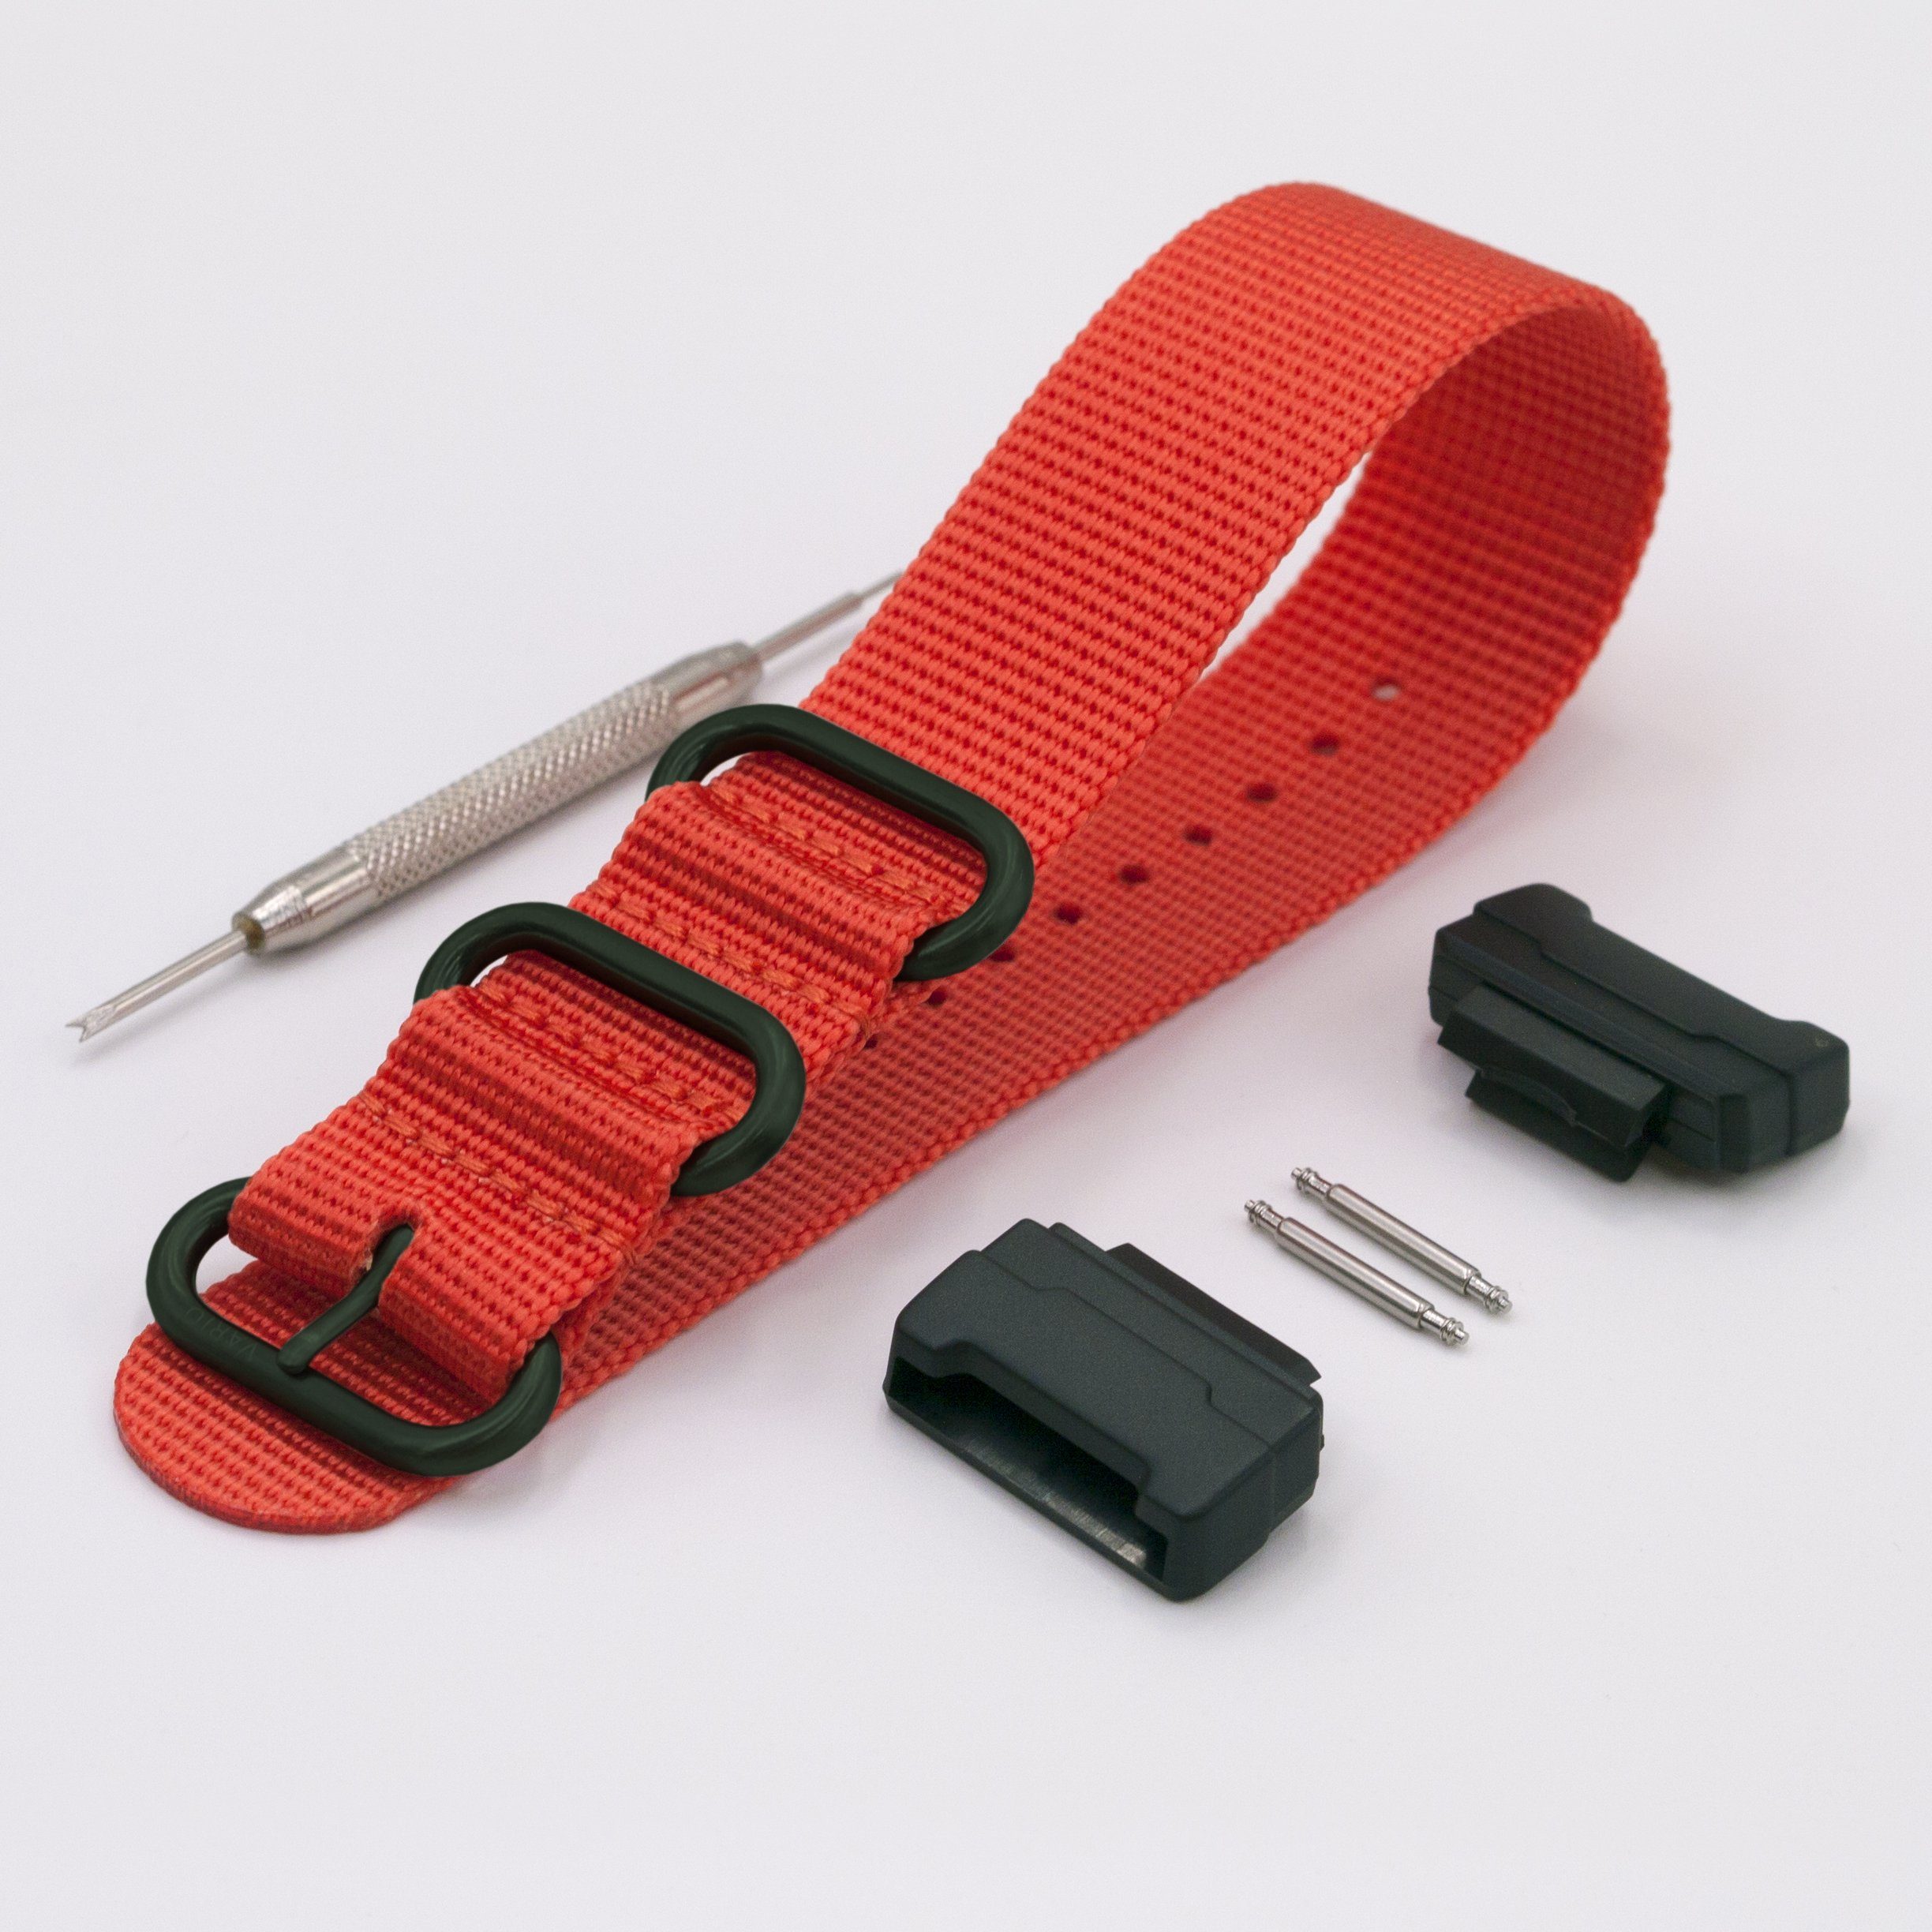 g-shock with casio adapter and vario ballistic nylon watch strap orange